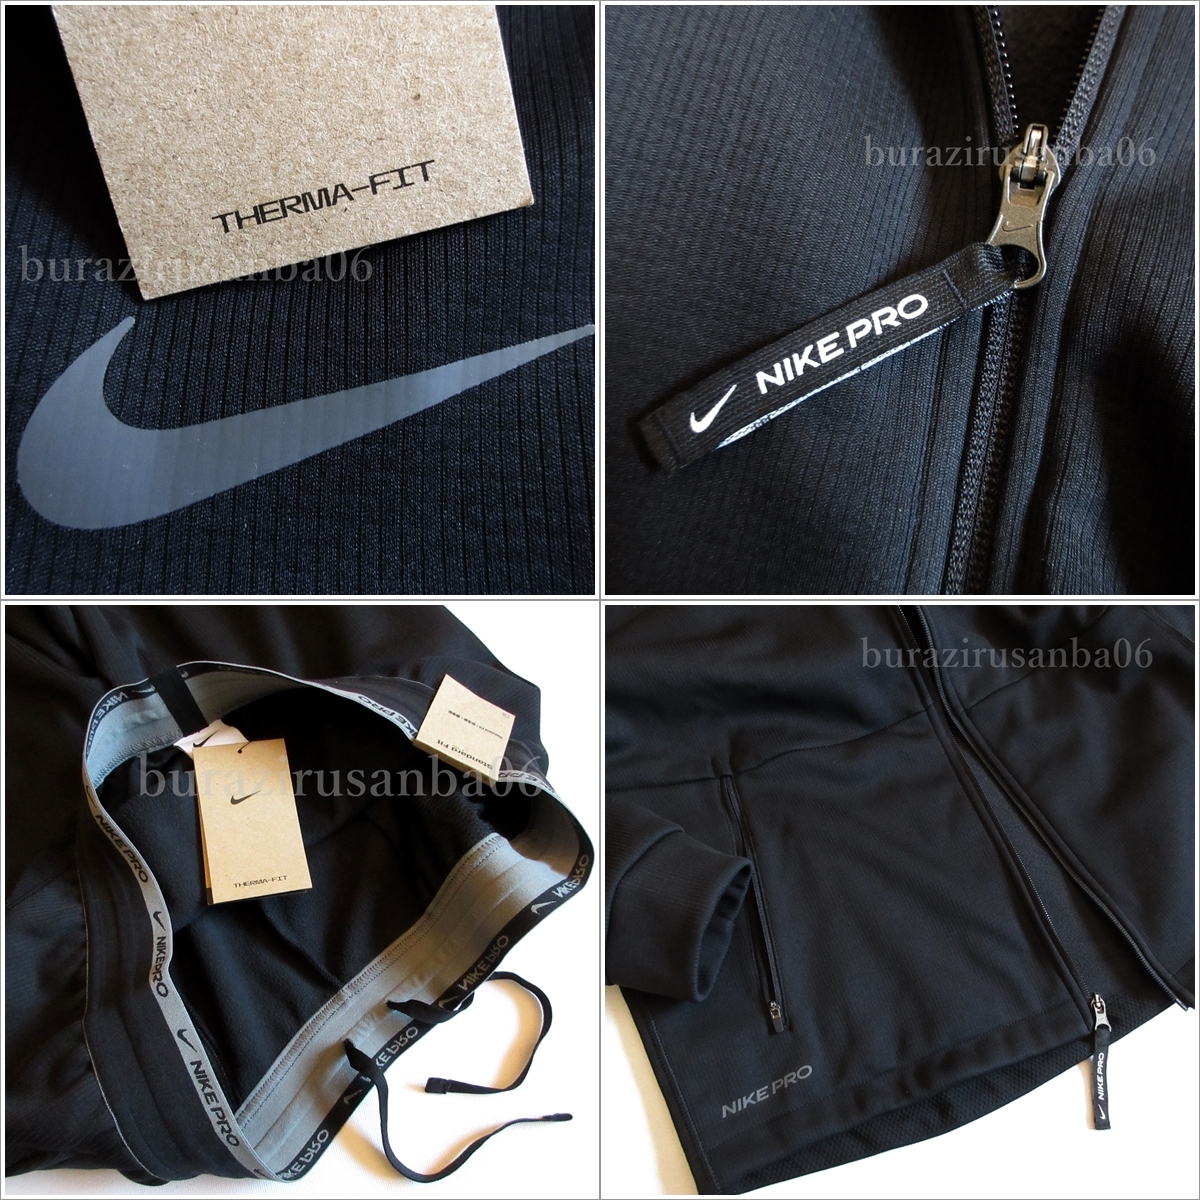  men's L* unused regular price 23,100 jpy NIKE PRO Nike Pro Thermasa-ma reverse side f lease full Zip f- dead jacket pants setup 